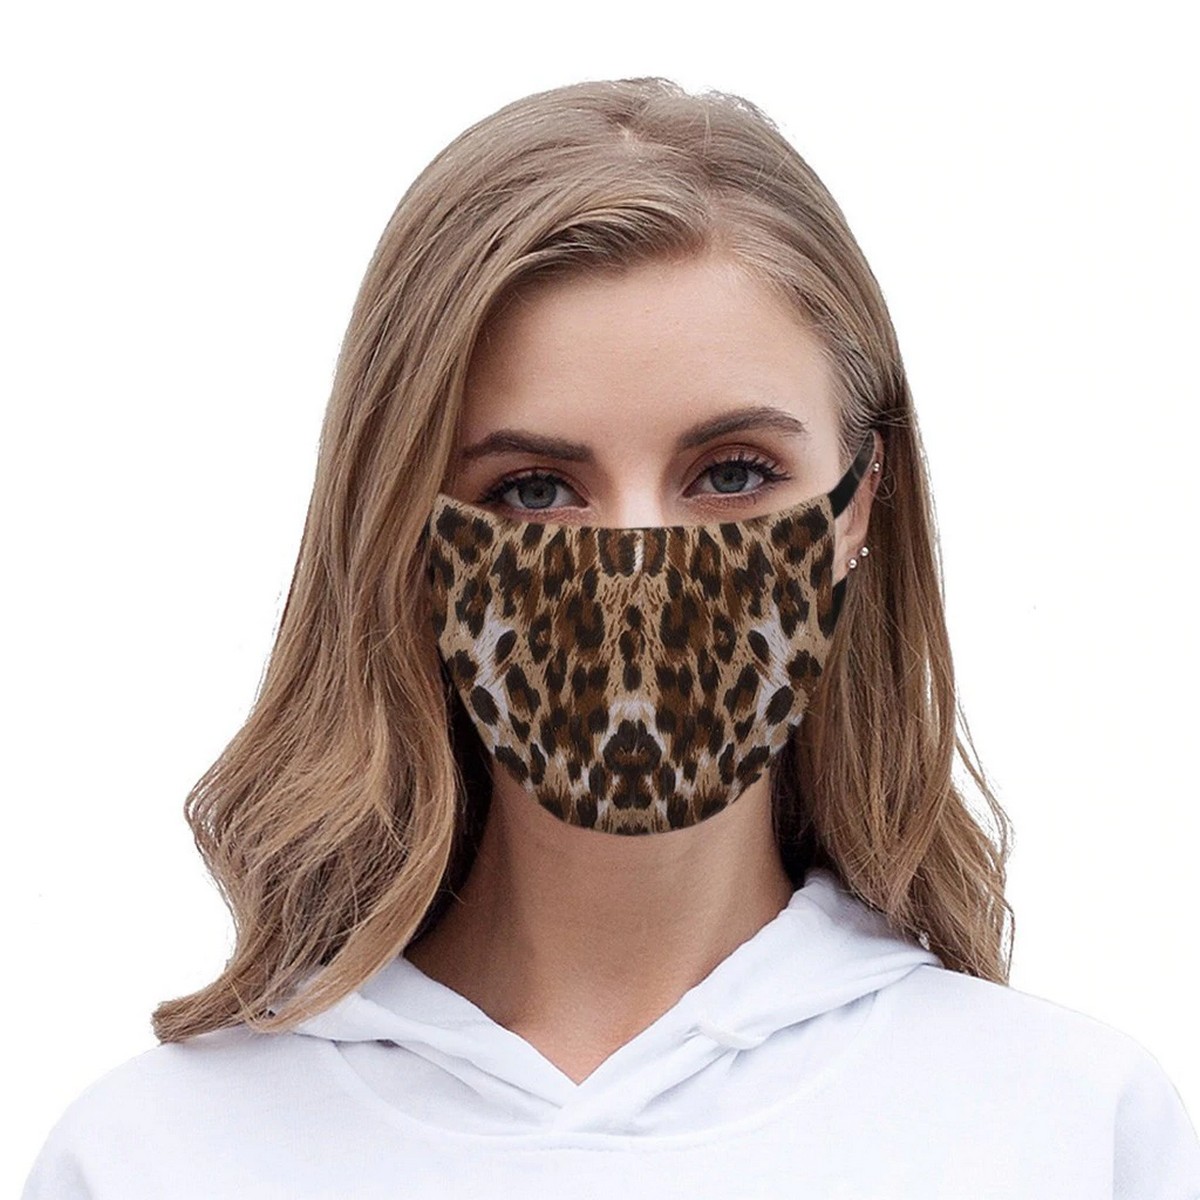 Leopard face mask